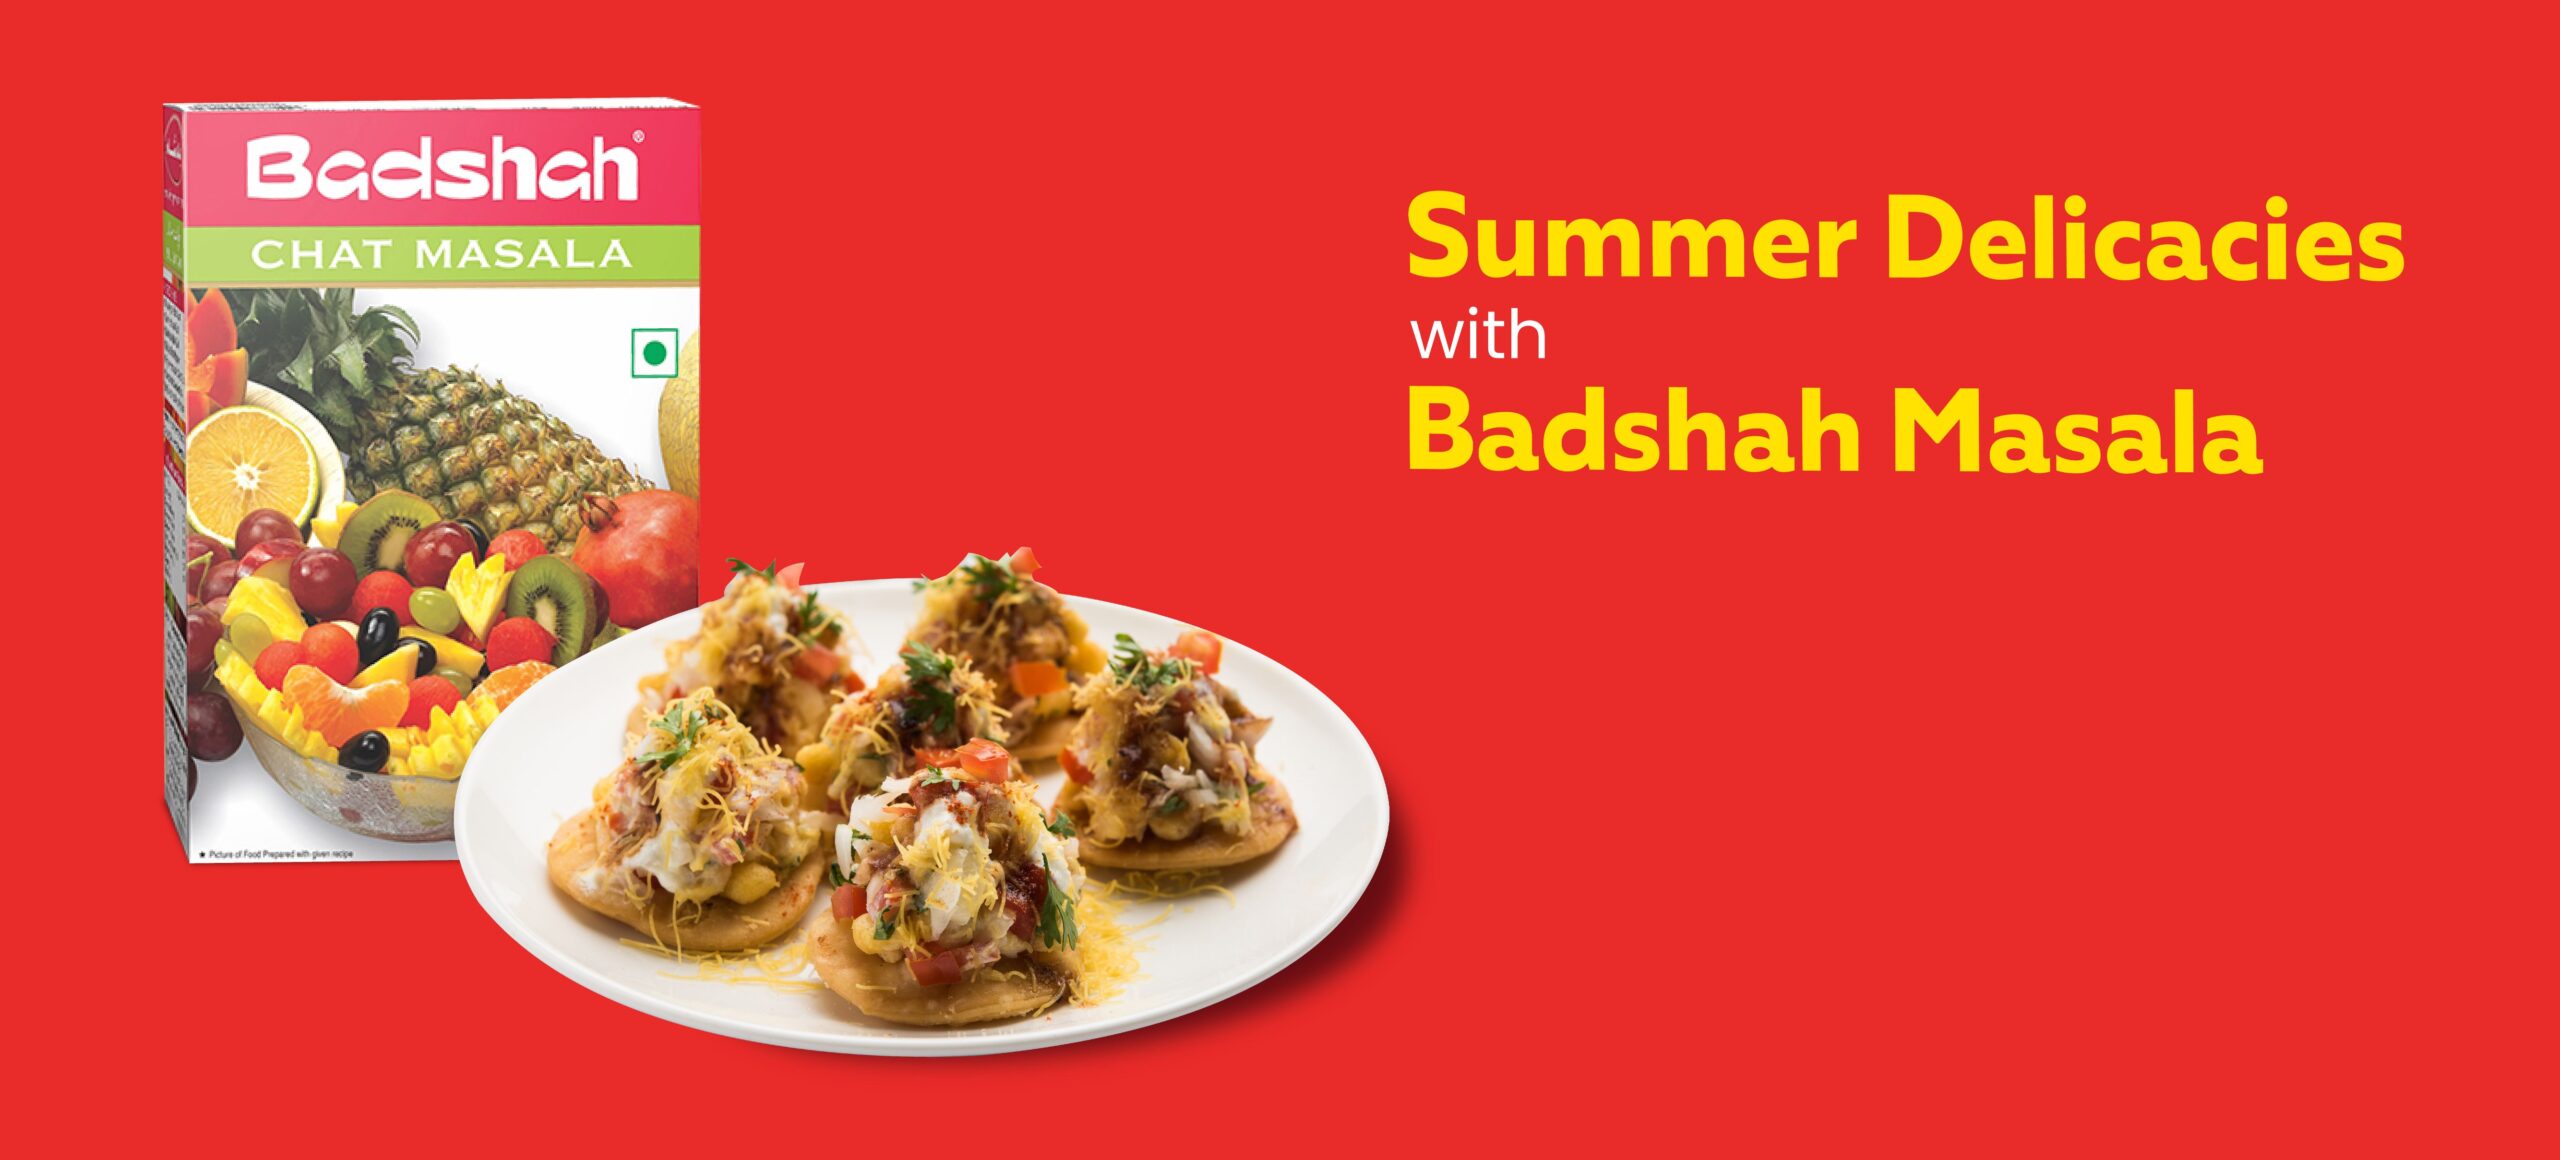 Summer Delicacies Recipes With Badshah Masala